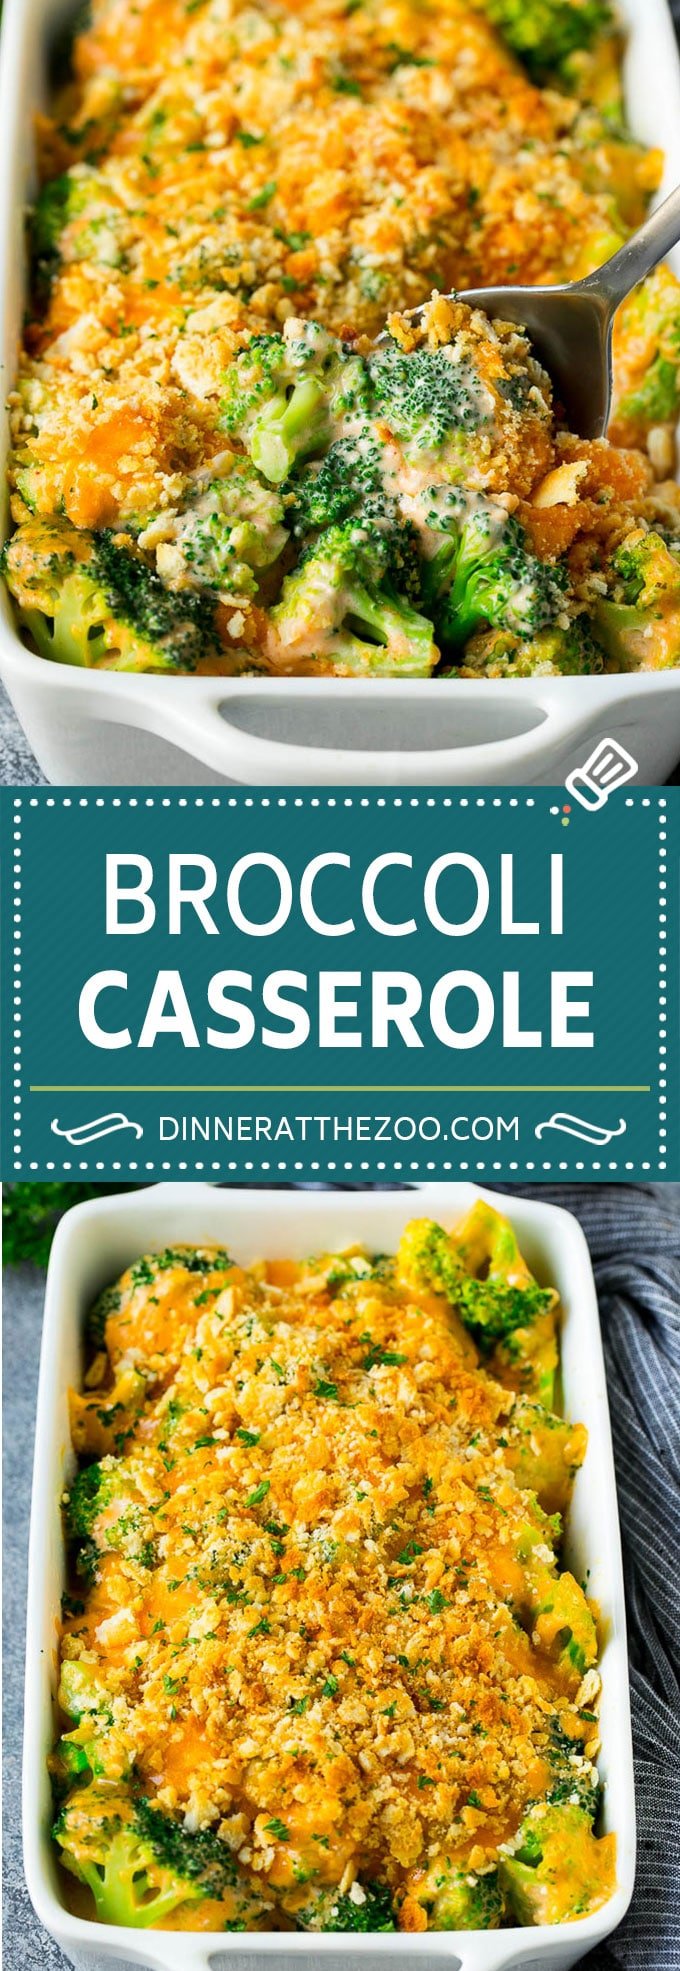 Broccoli Casserole Recipe | Broccoli and Cheese Casserole | Baked Broccoli #broccoli #cheese #casserole #sidedish #dinner #dinneratthezoo